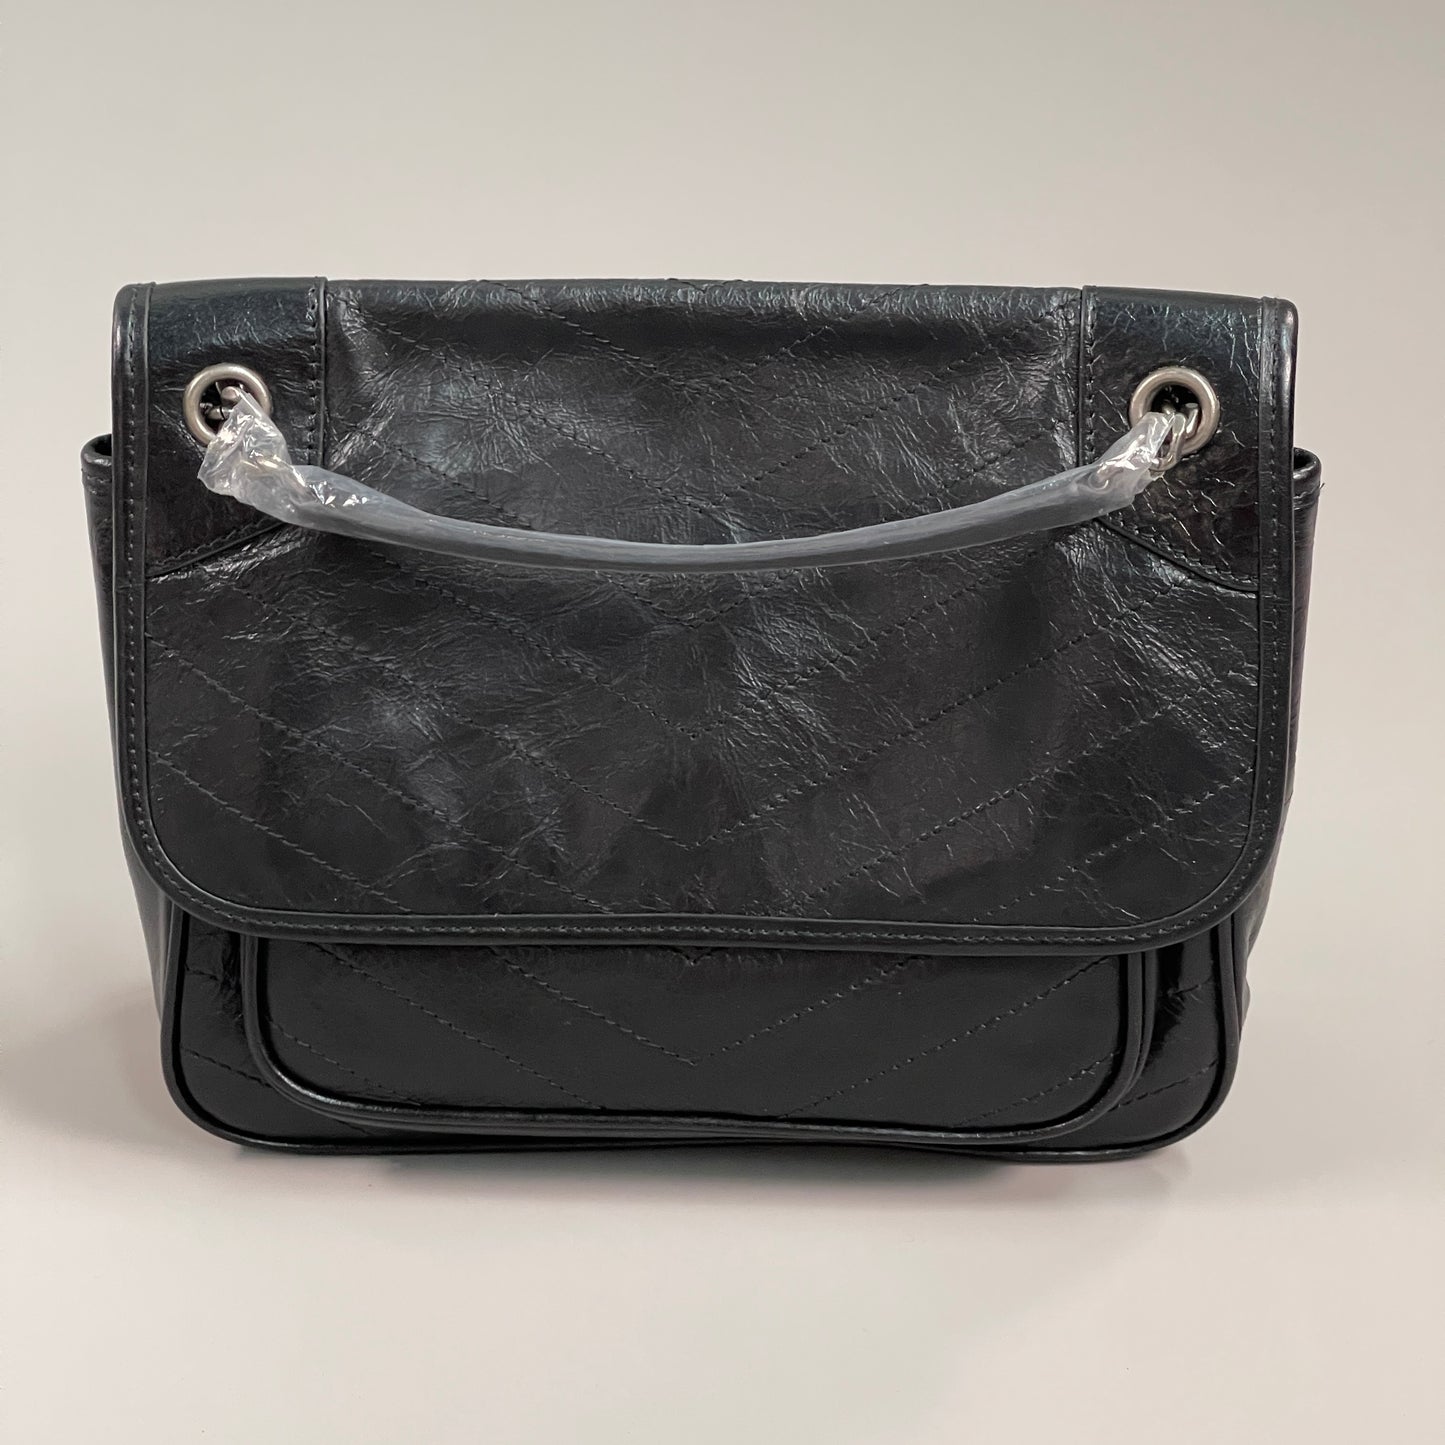 PLUM QUEEN Classic Genuine Leather Handbag Women's Sz S Black (New)